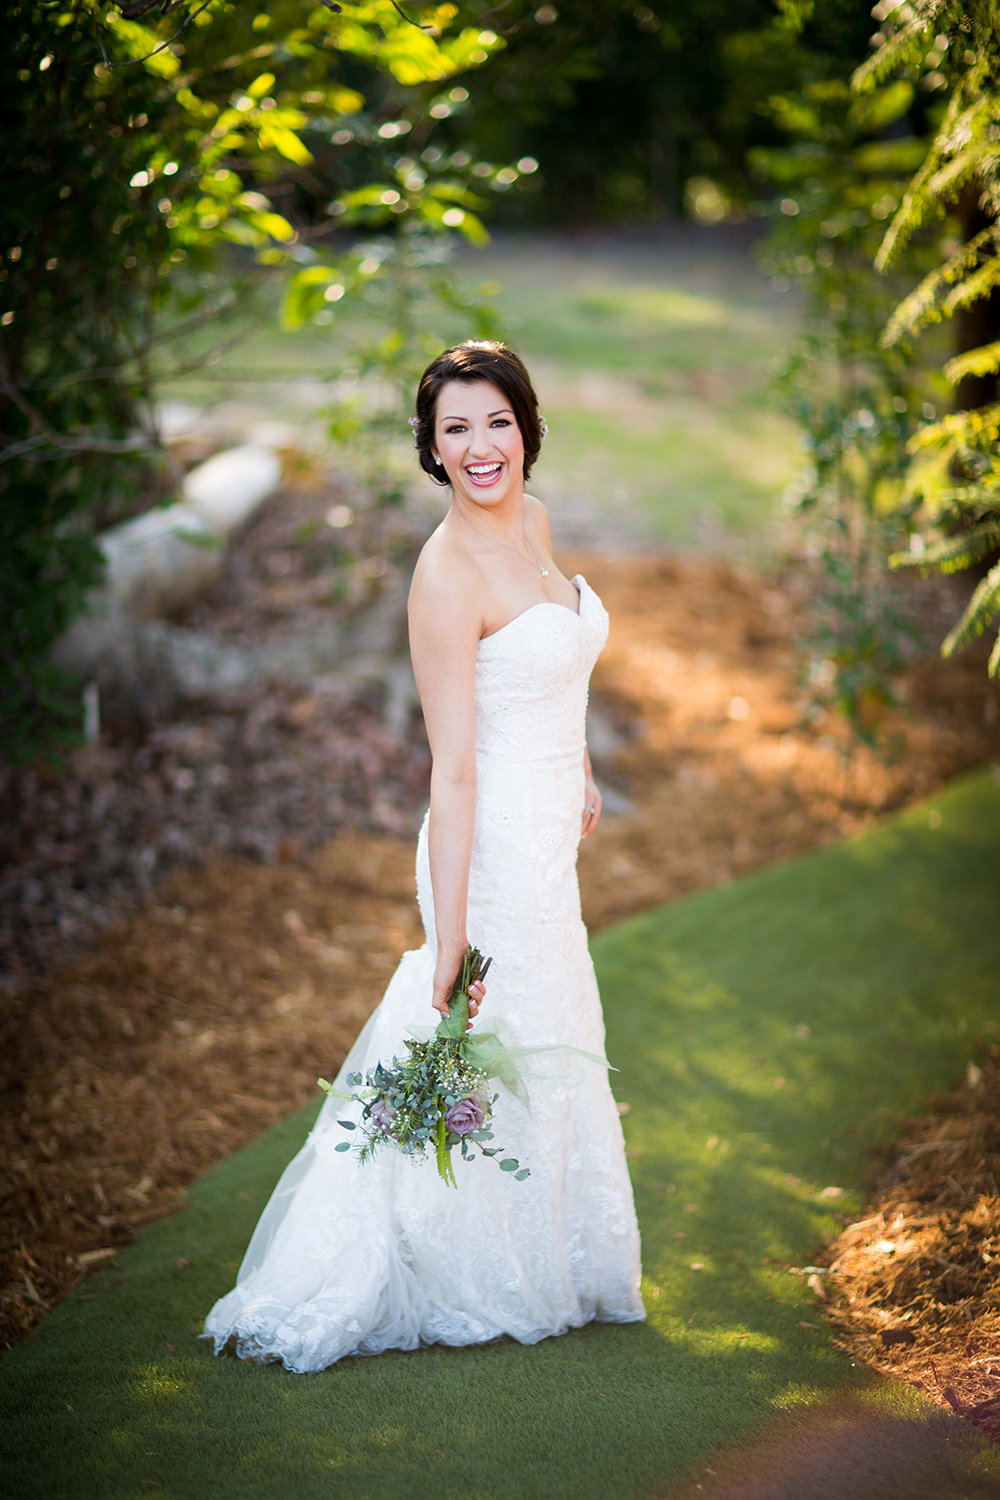 Ethereal Resort wedding photos beautiful bride outdoors